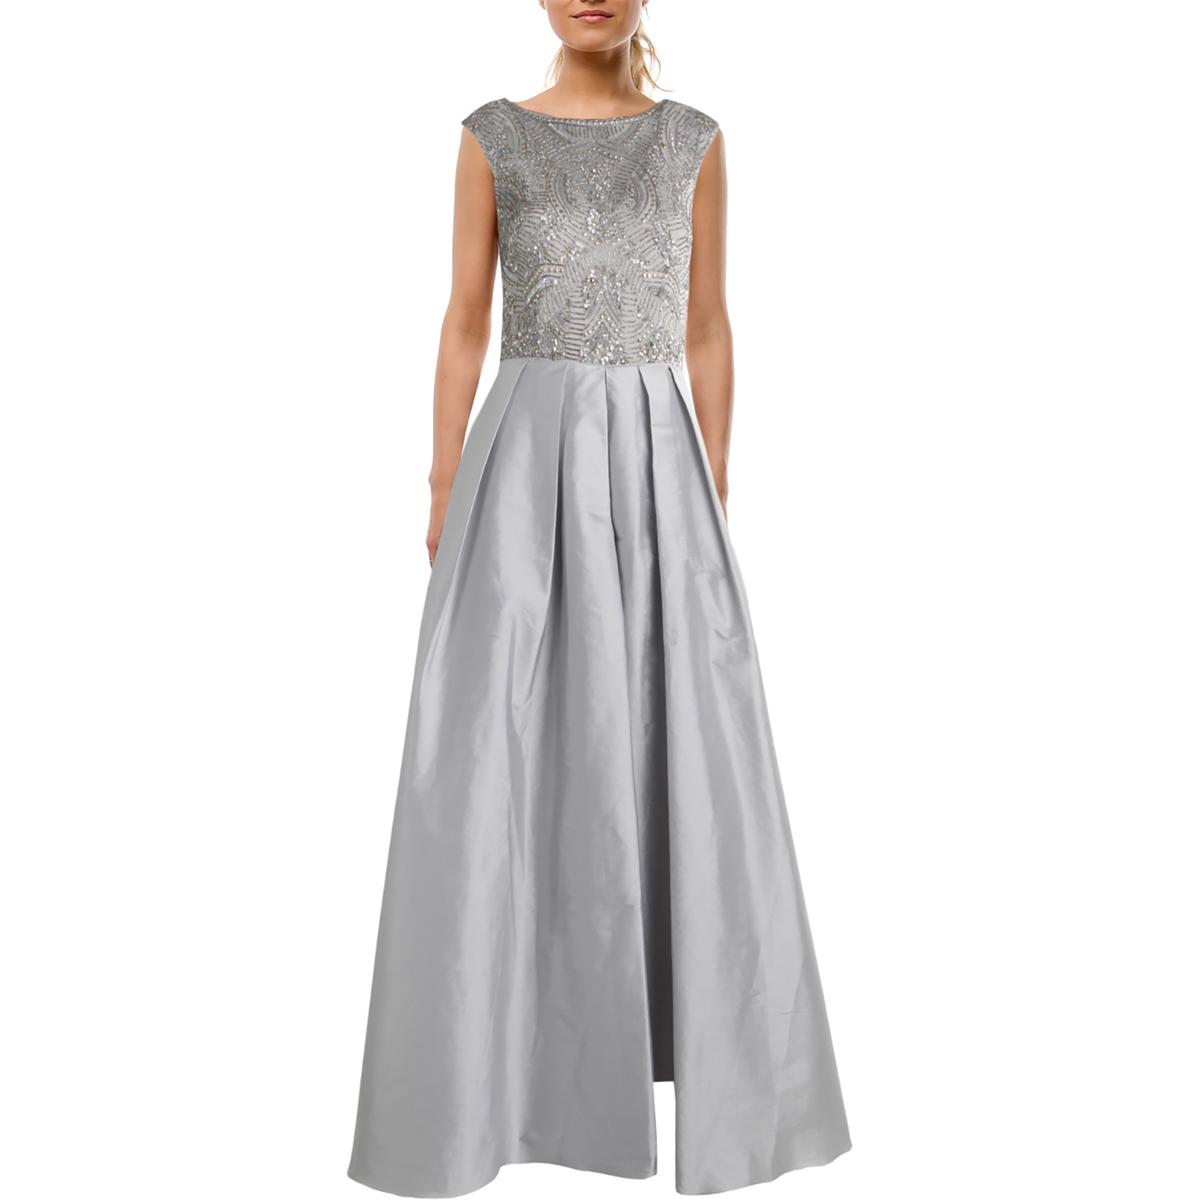 Aidan Mattox 3001 Womens Silver Taffeta Embellished Evening Dress Gown